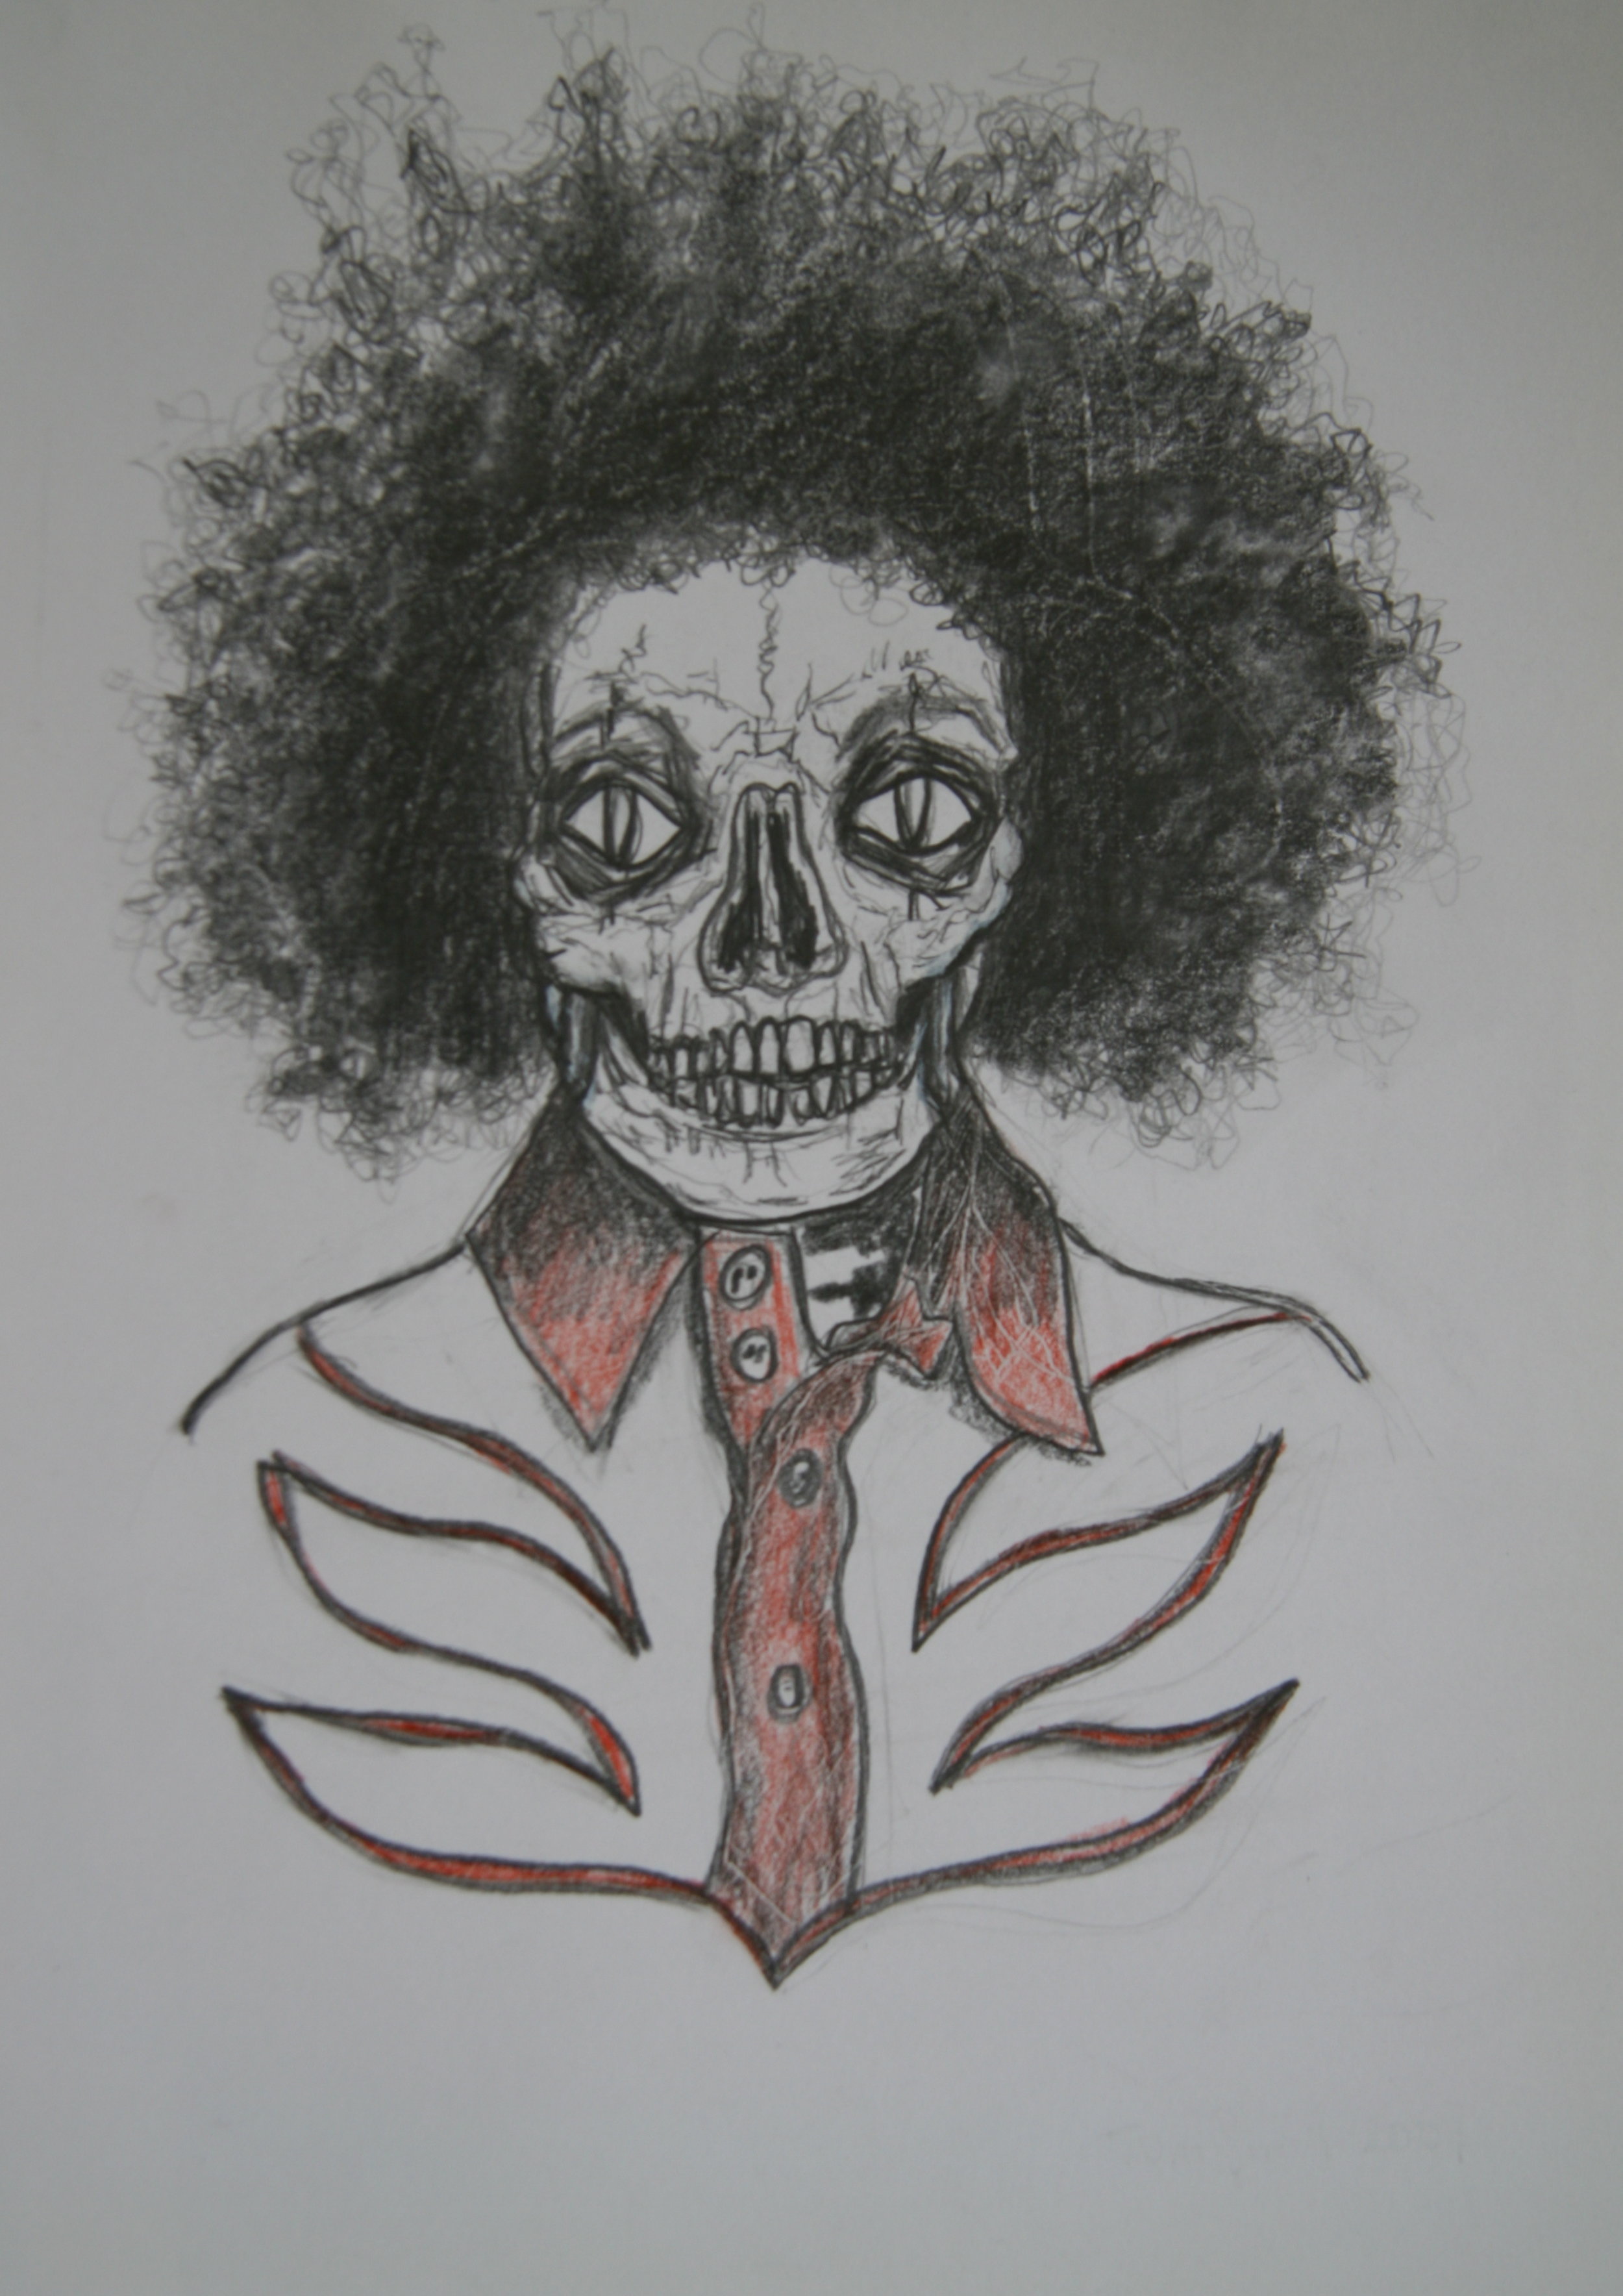 Skull 3, 30x21cm, pencil on paper